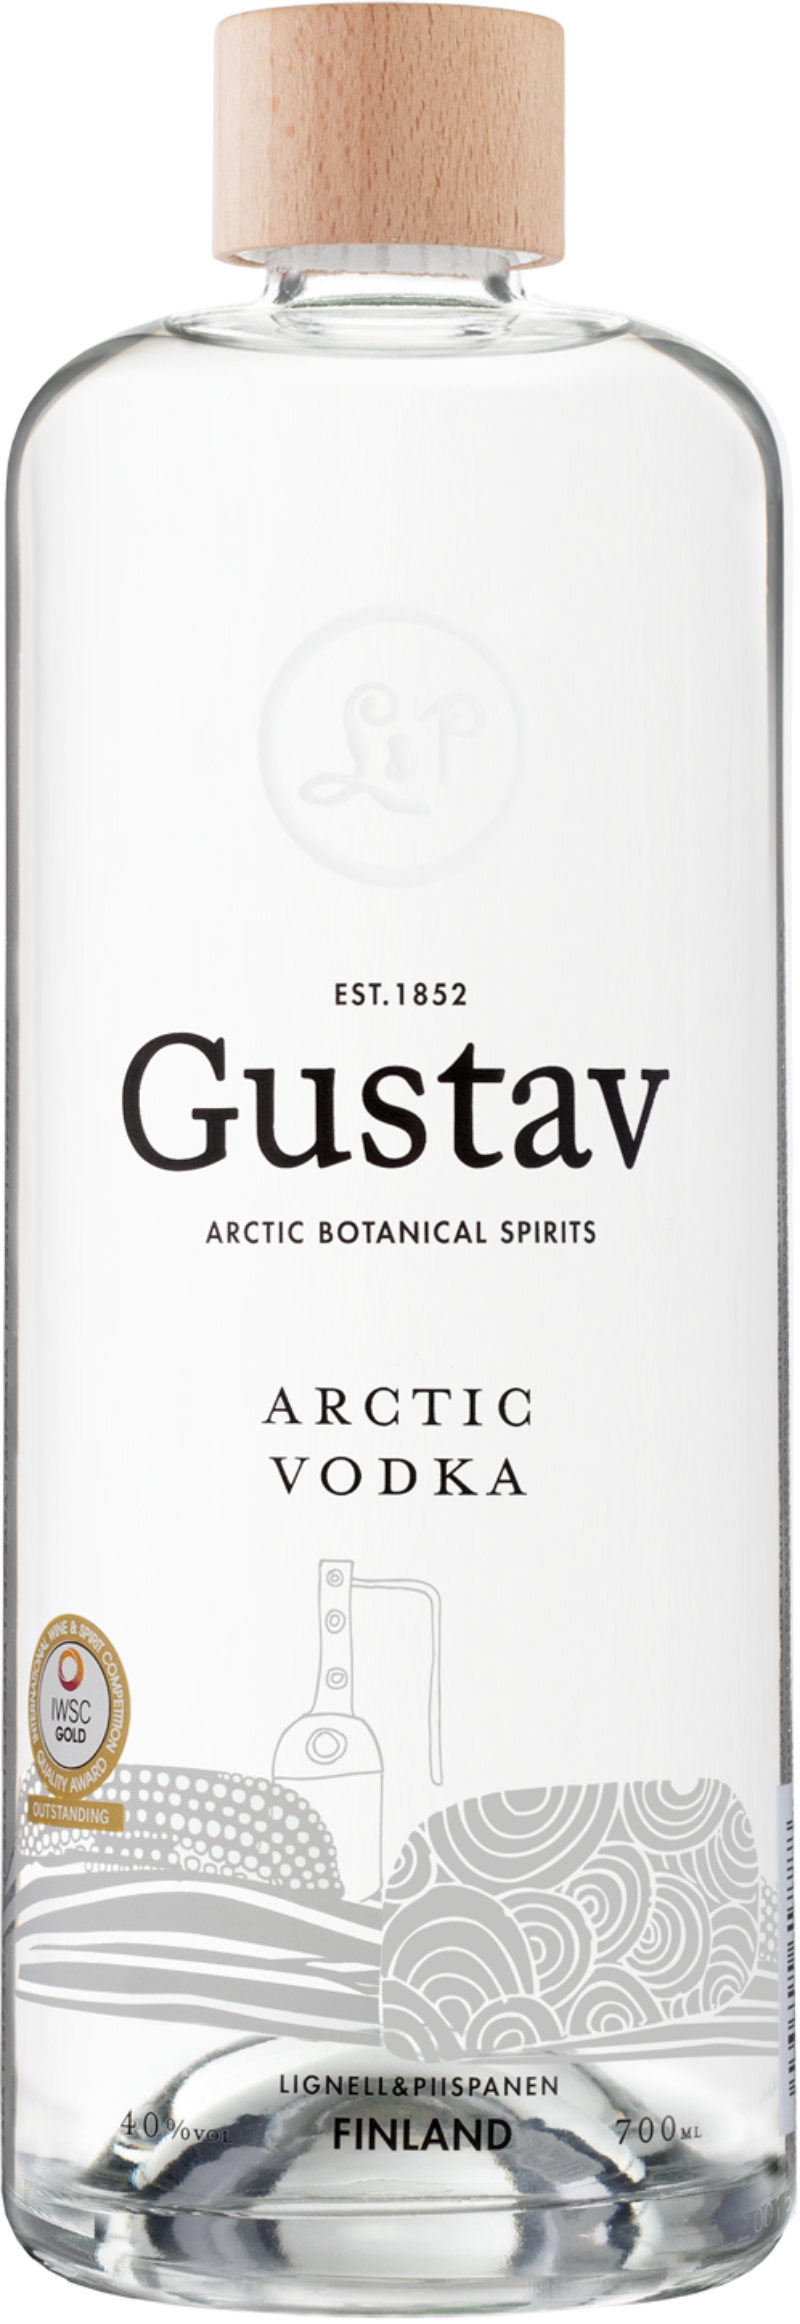 Gustav - Arctic cl 40% 70 Vodka vol